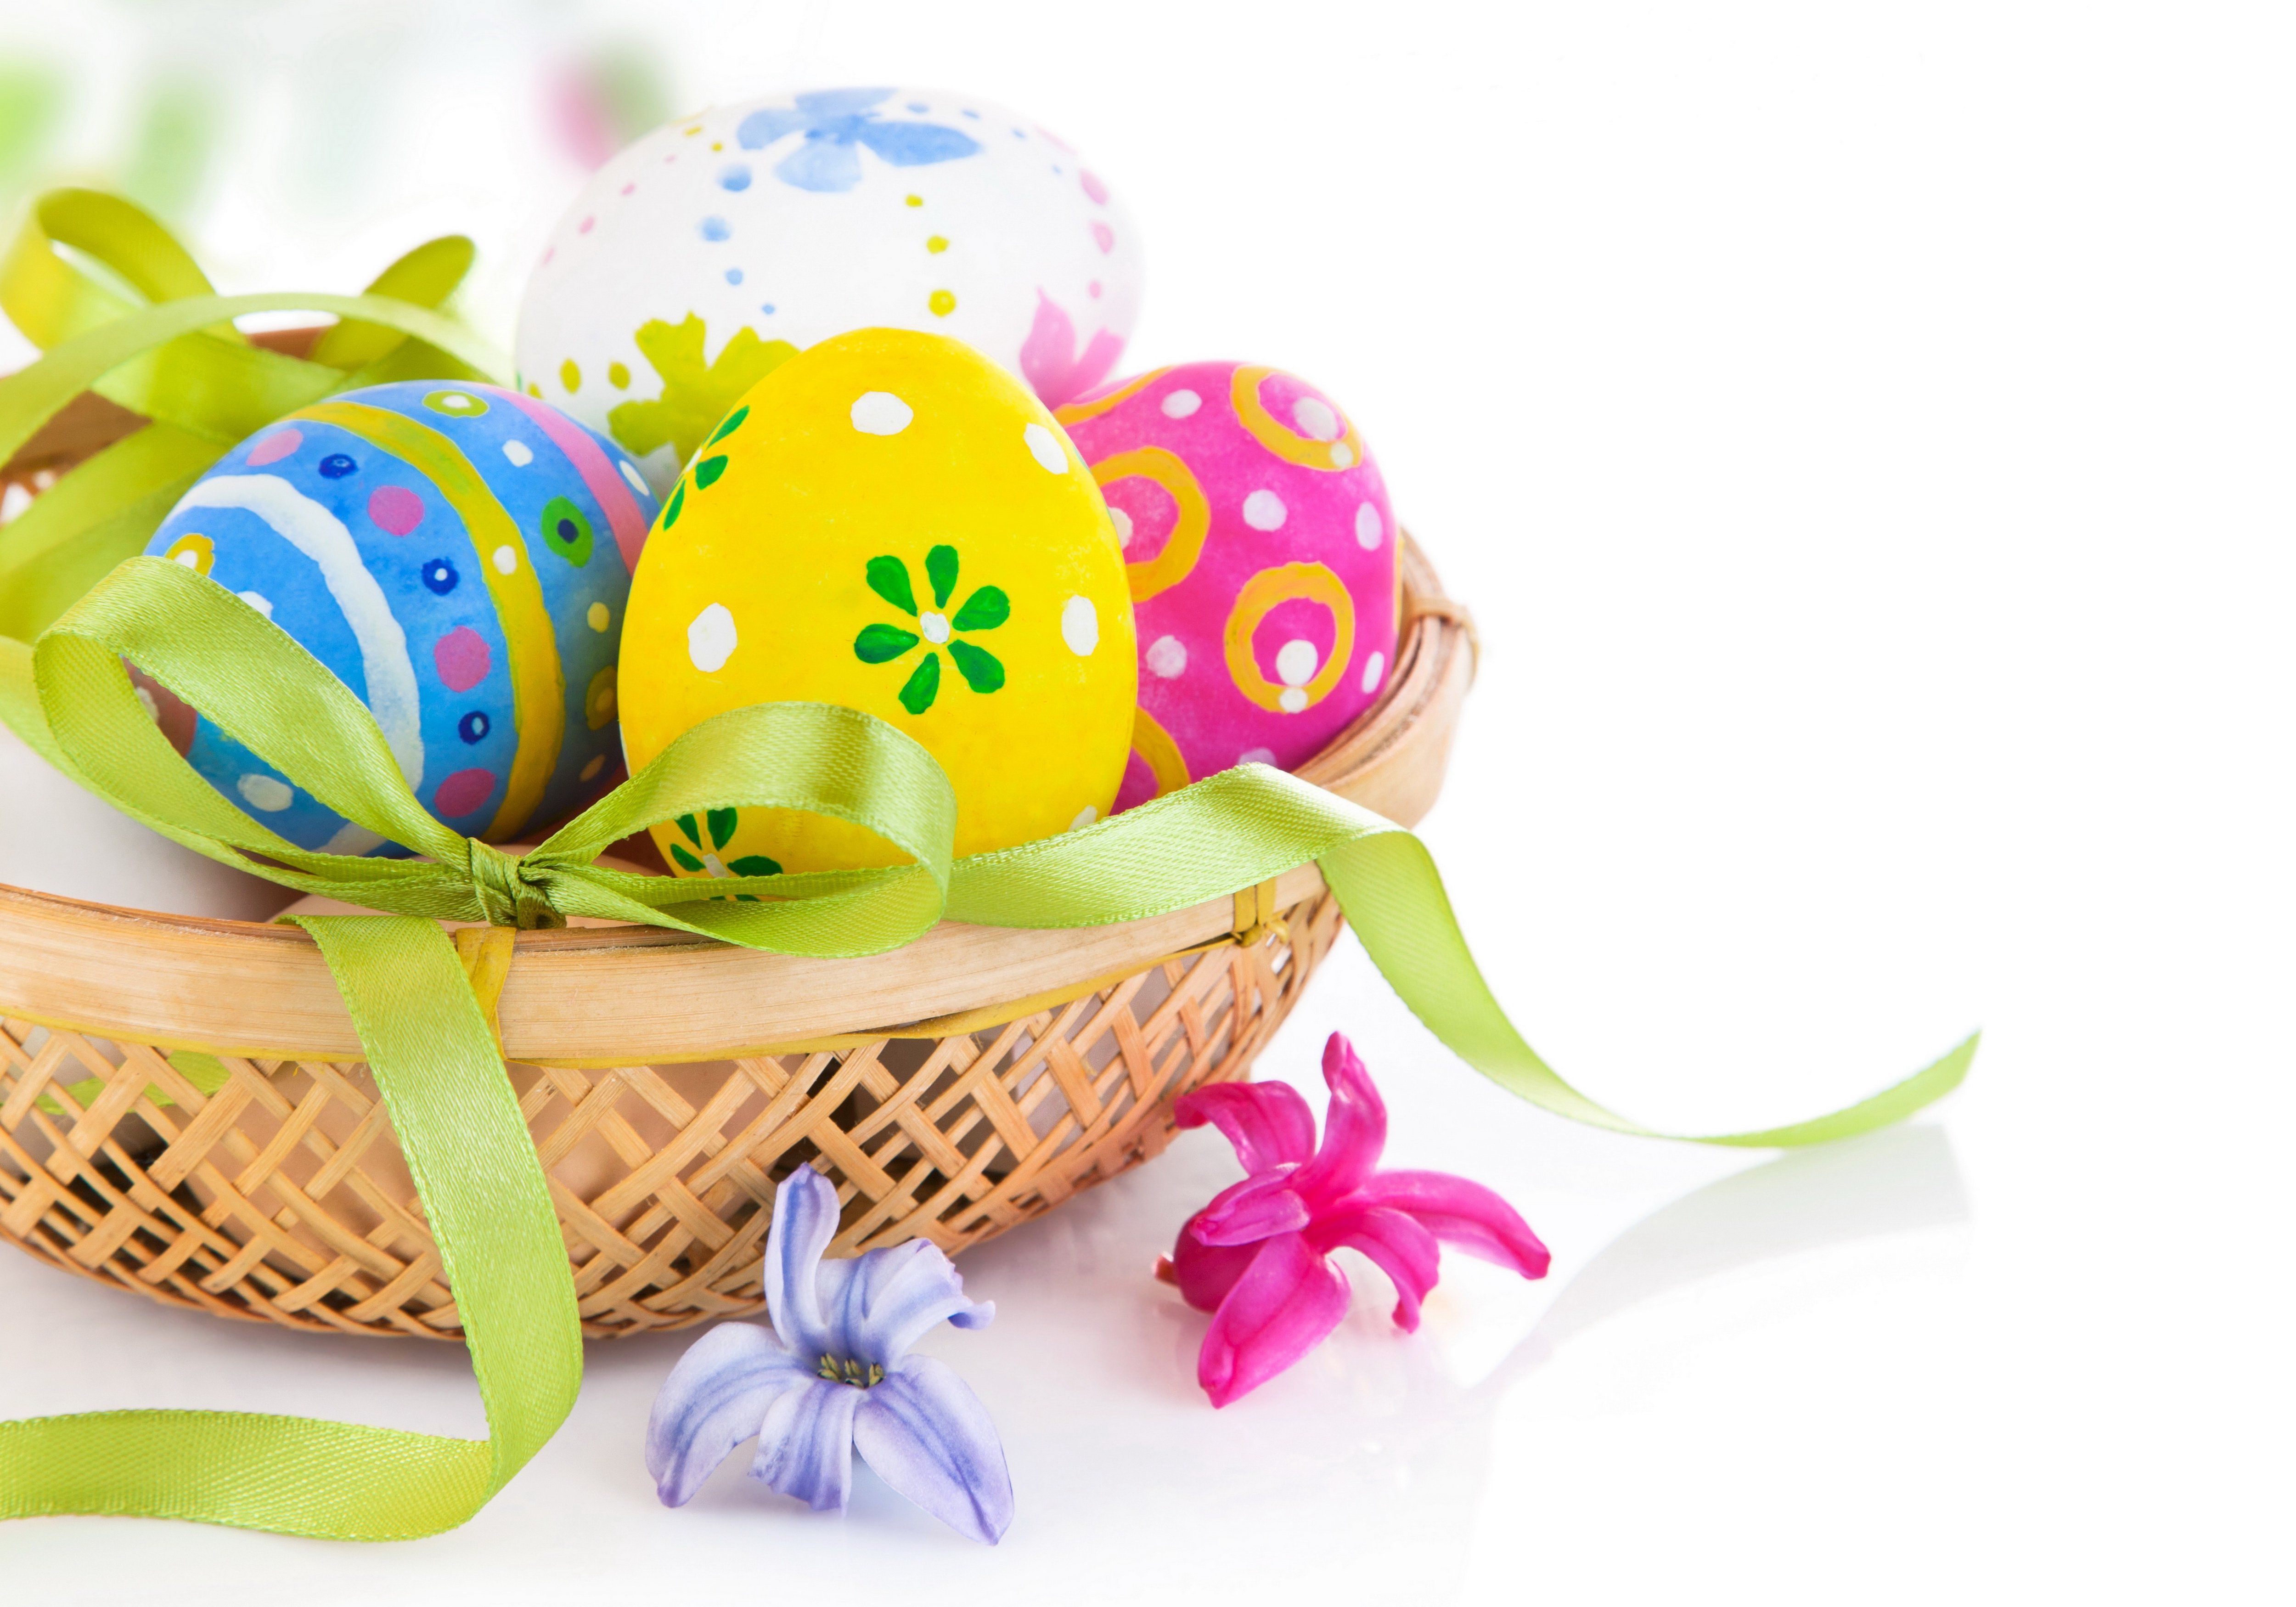 Hd Easter Image Easter Renewal Of Hope